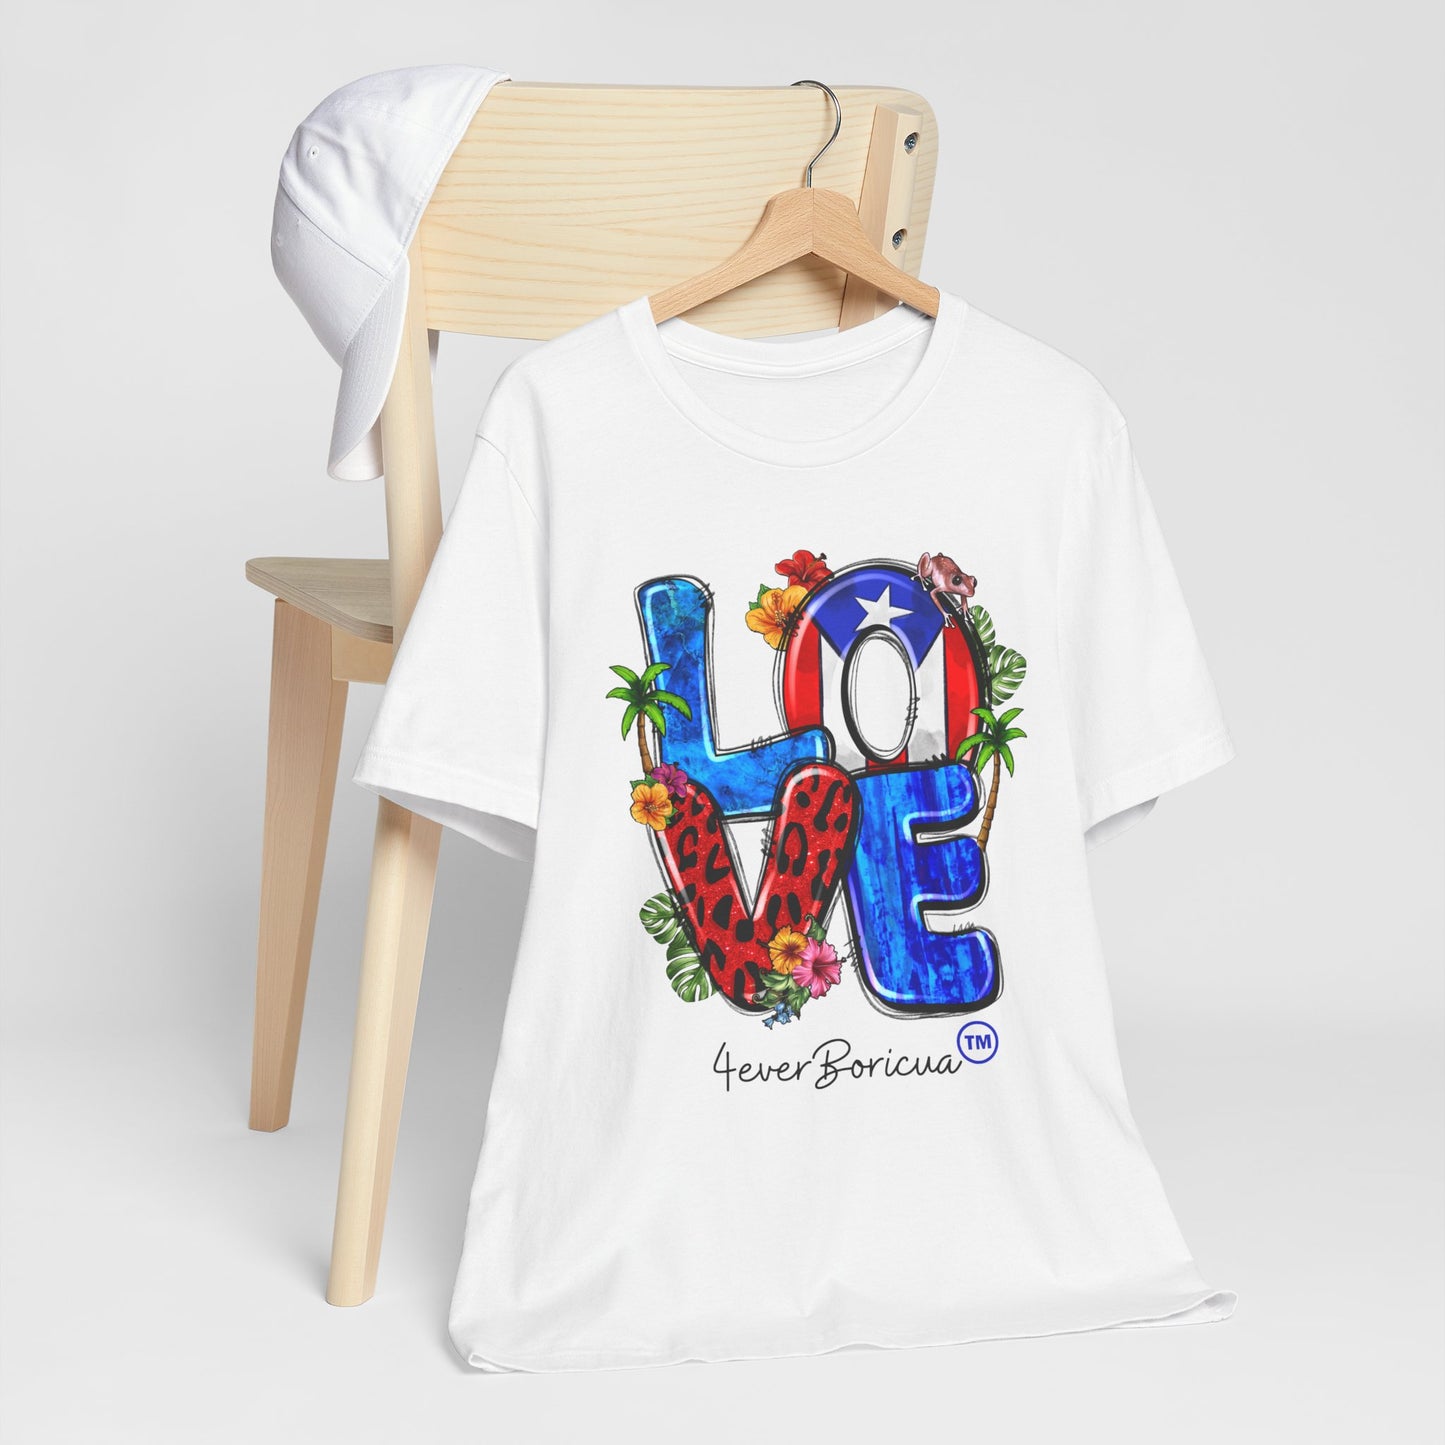 LOVE PUERTO RICO Unisex Shirt with Puerto Rican Elements 4everBoricua™️